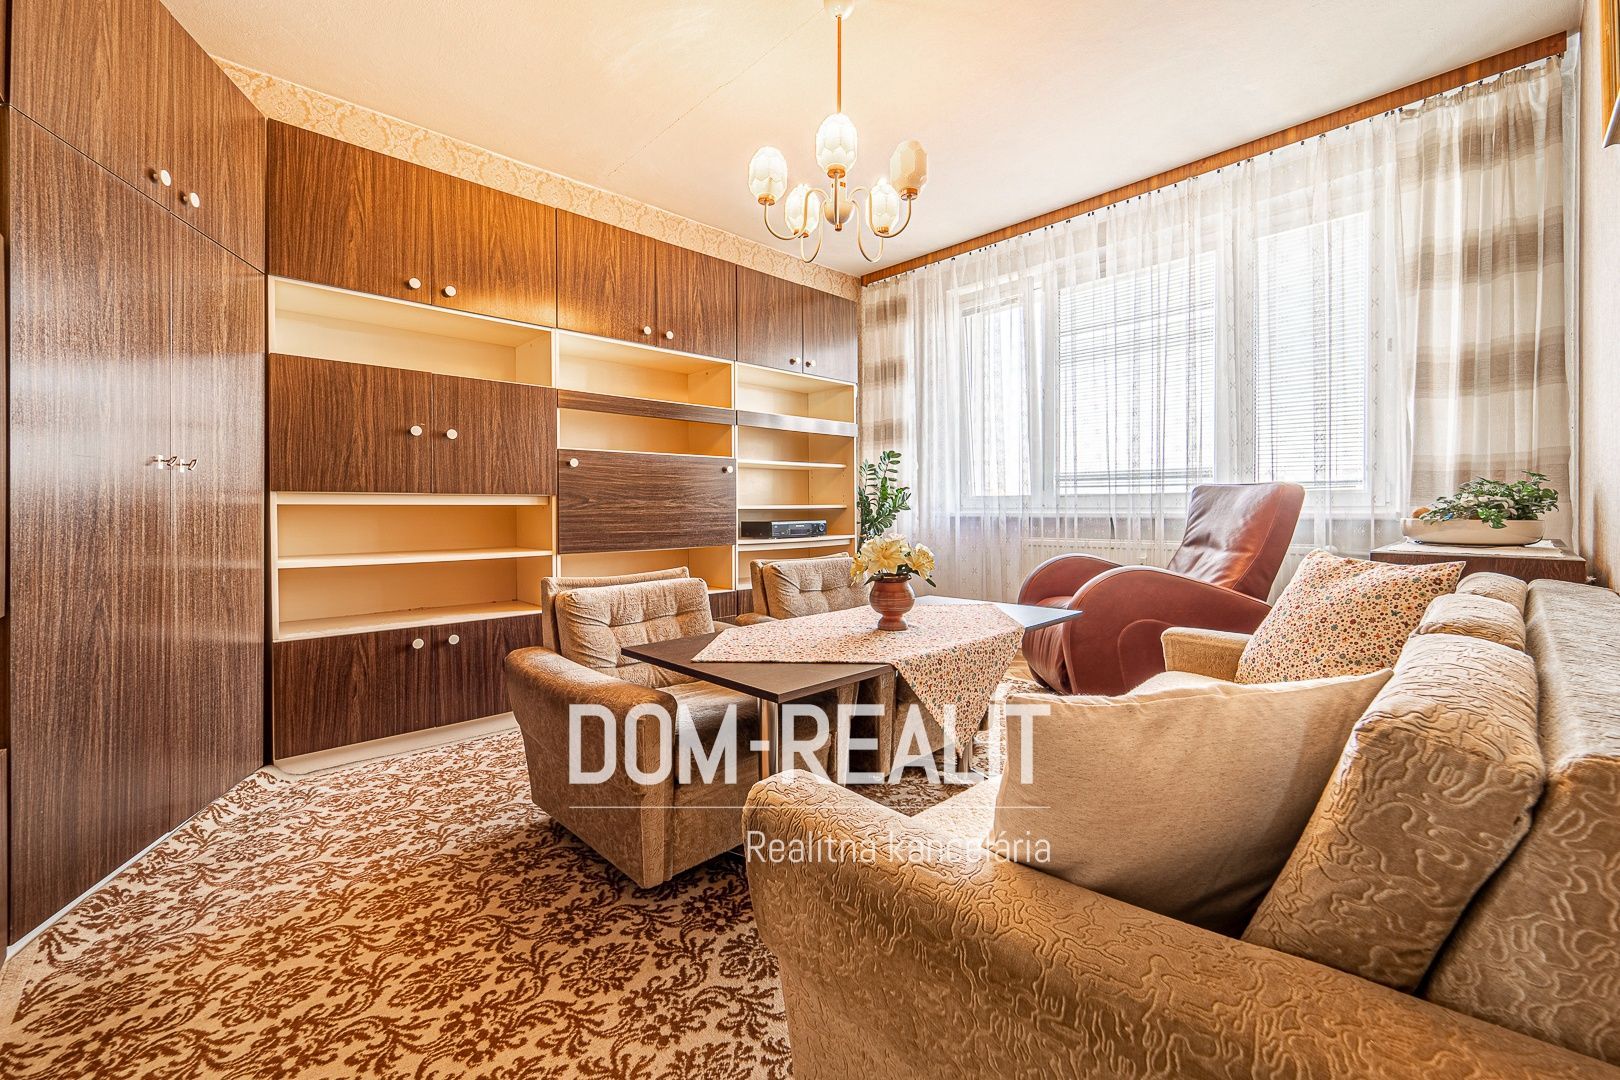 Nehnutelnost DOM-REALÍT ponúka 3 izbový byt v pôvodnom stave v Trnave na Nerudovej ulici